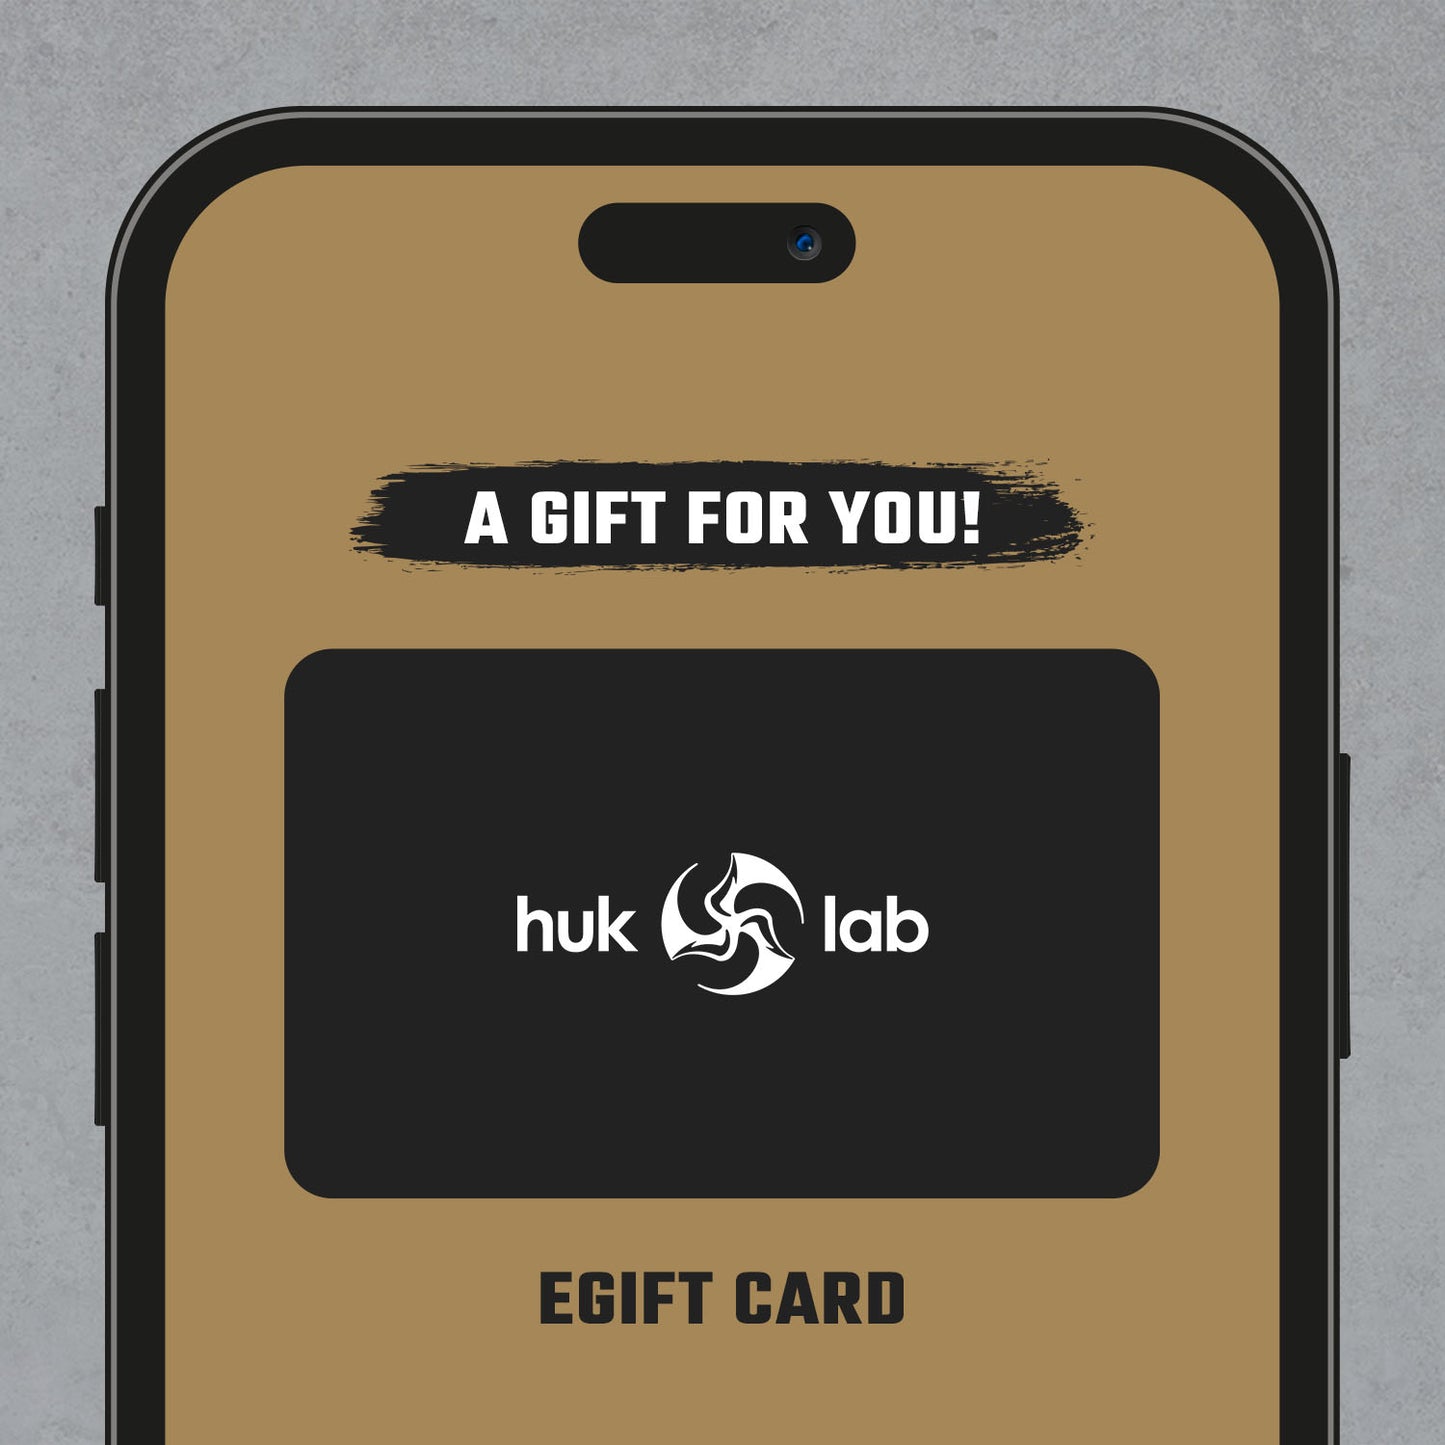 Huk Lab Gift Card